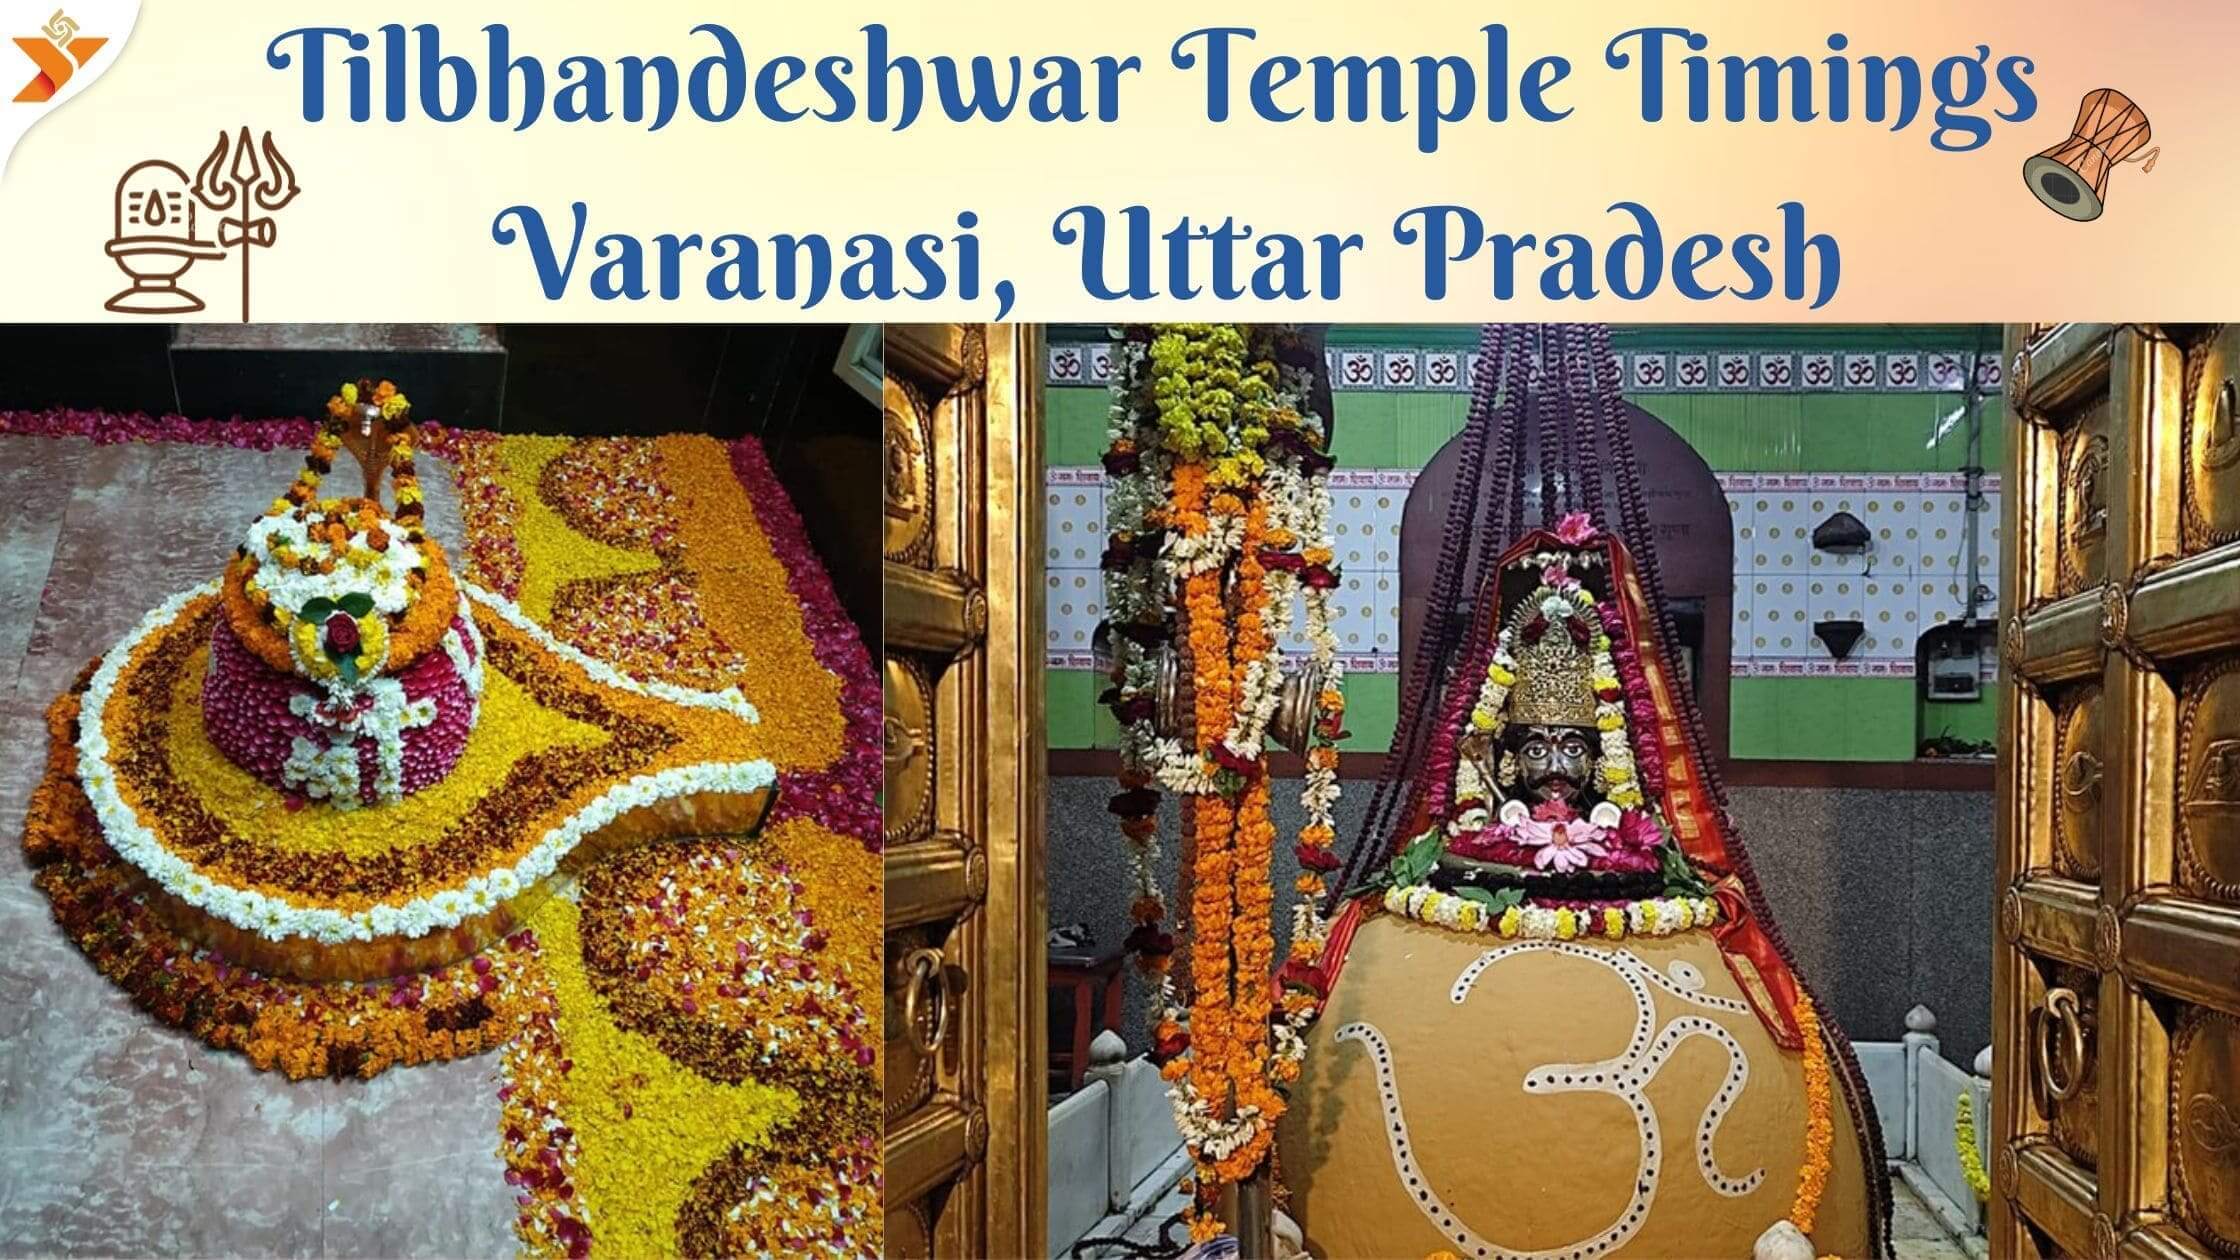 Tilbhandeshwar Temple Timings